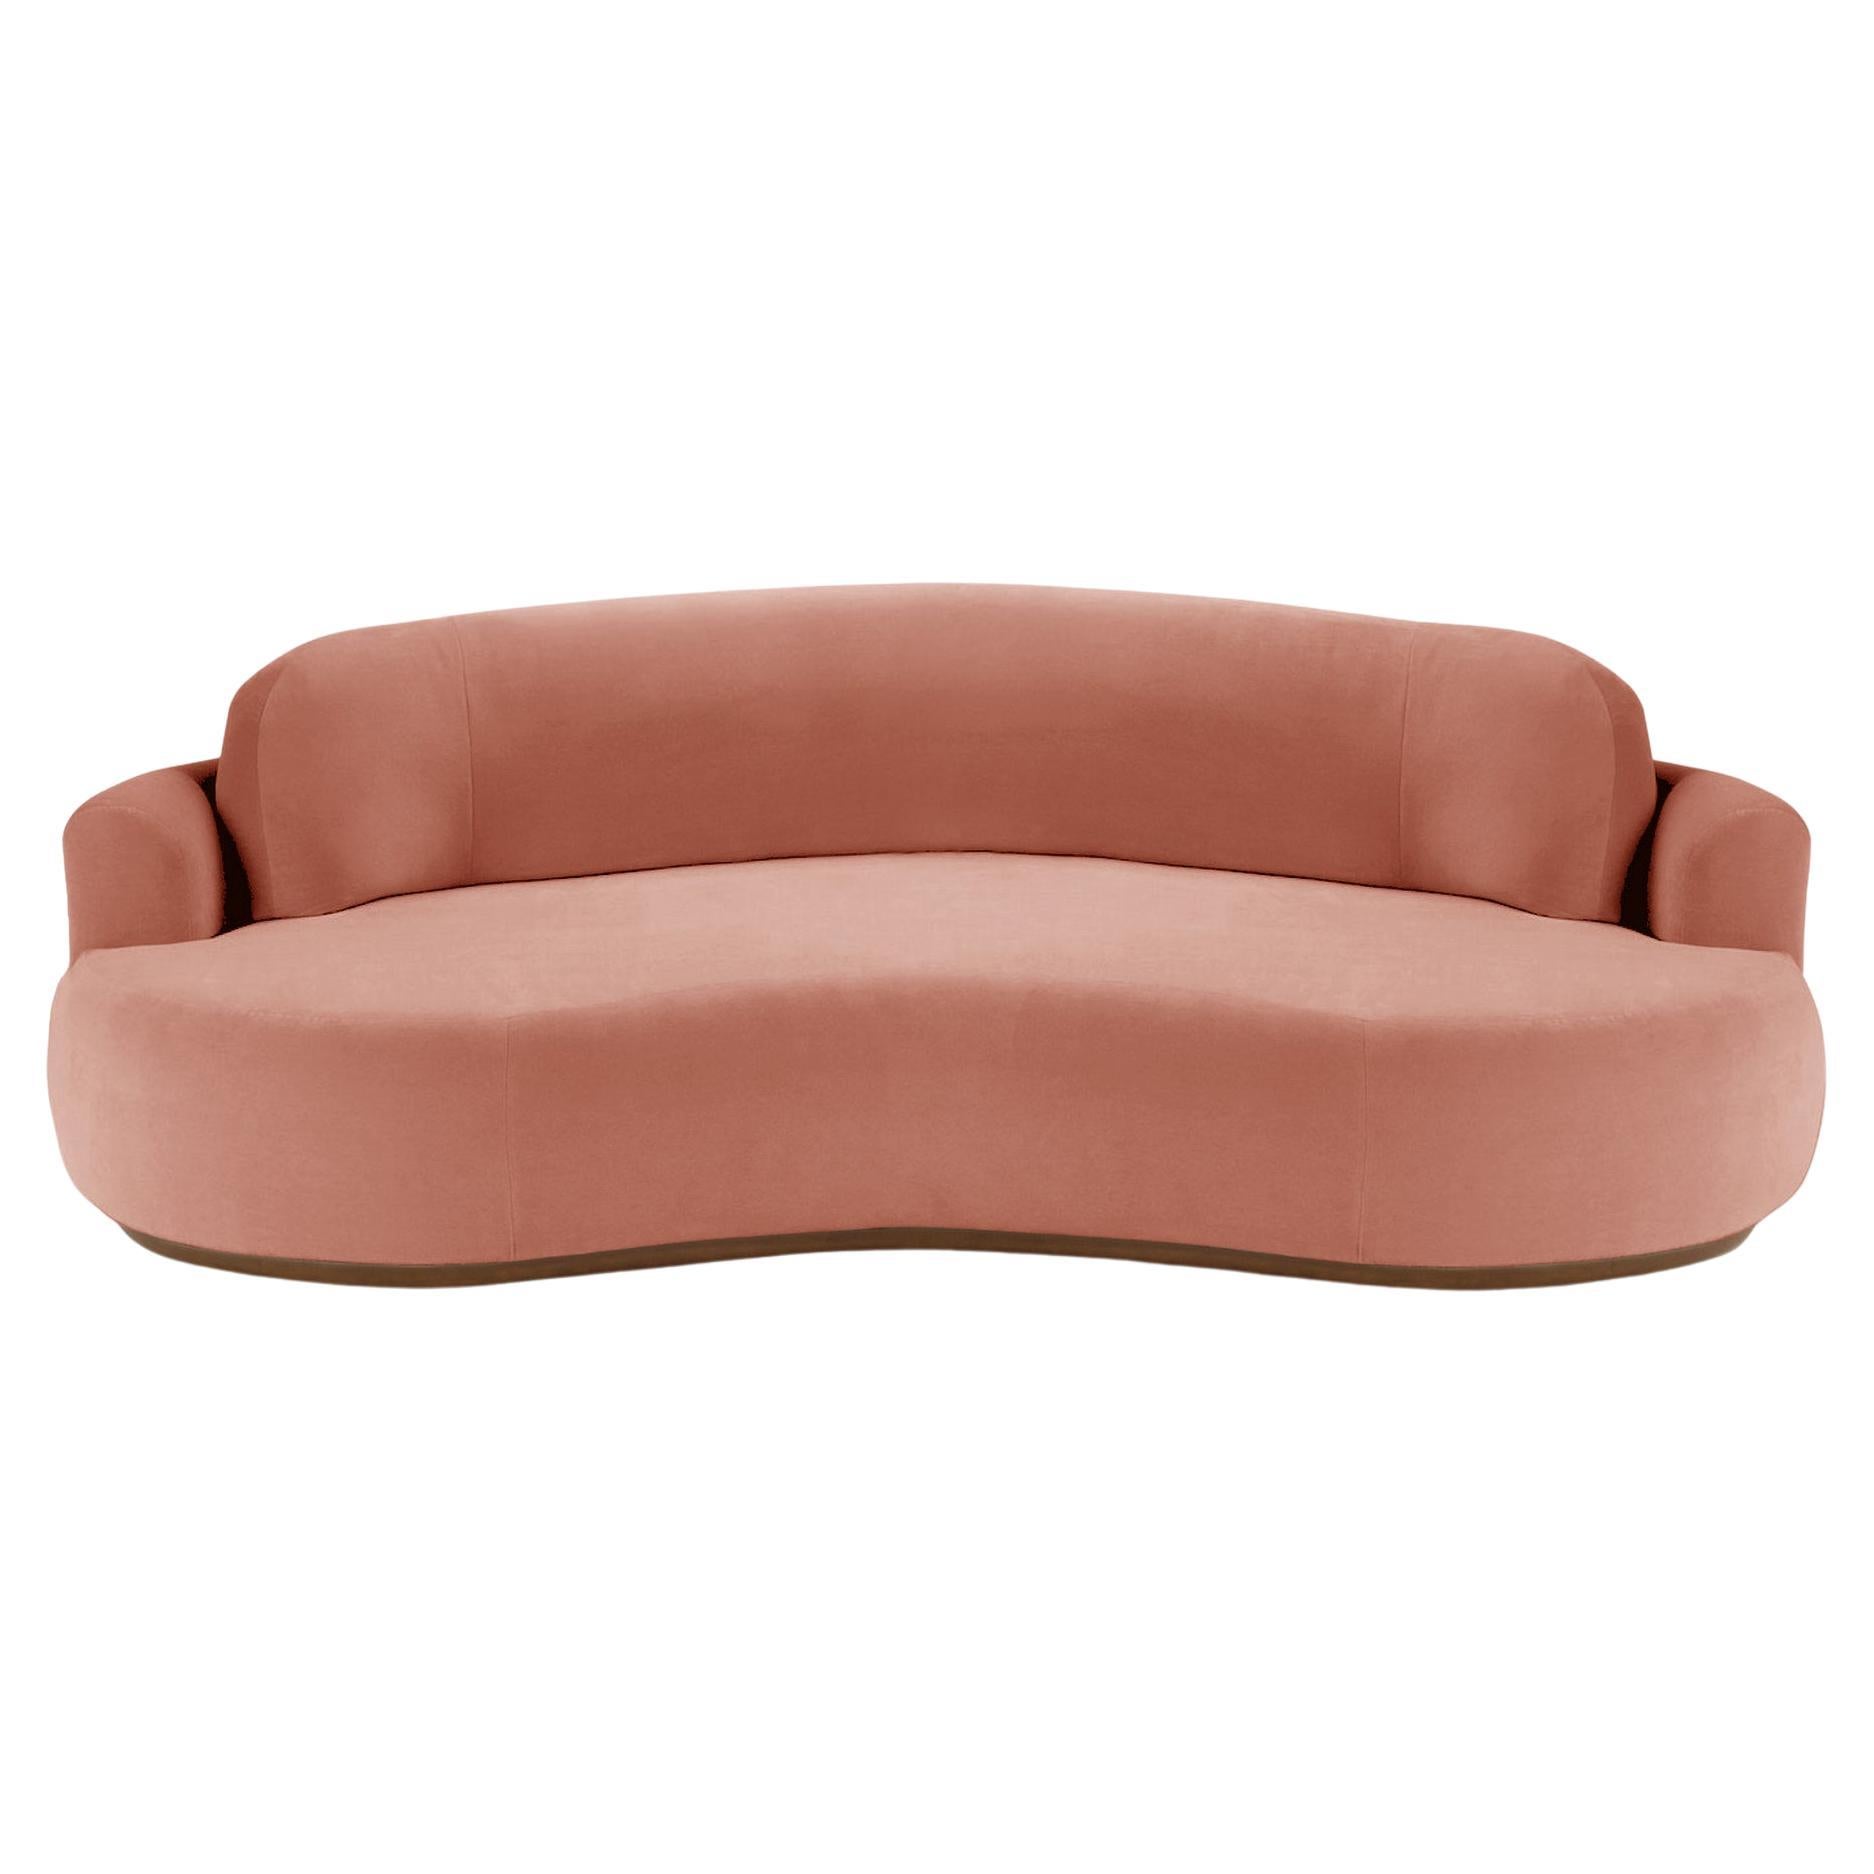 Naked Round Sofa, Medium with Beech Ash-056-1 and Paris Brick